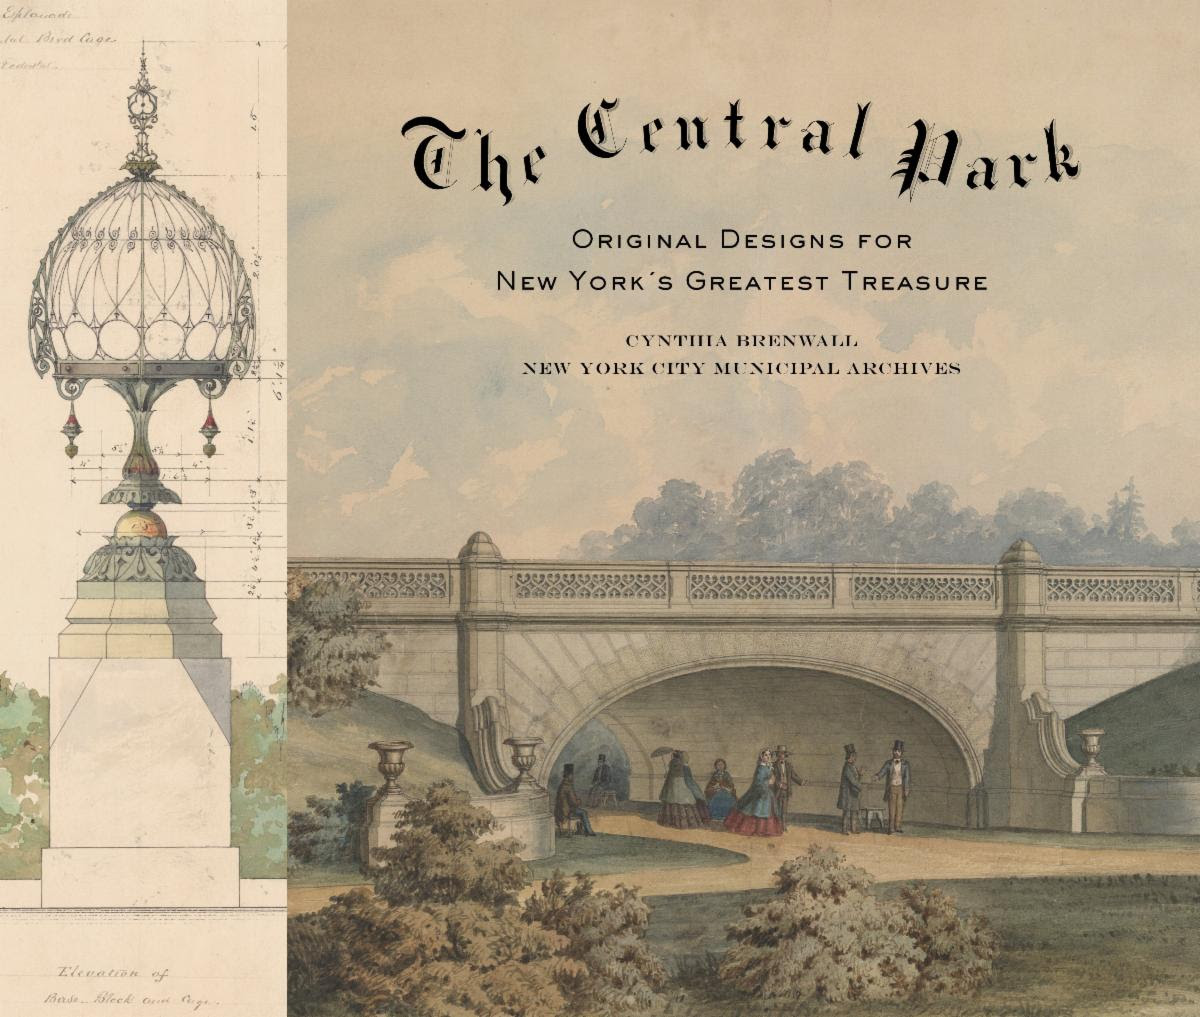 The Central Park: Original Designs for New York’s Greatest Treasure